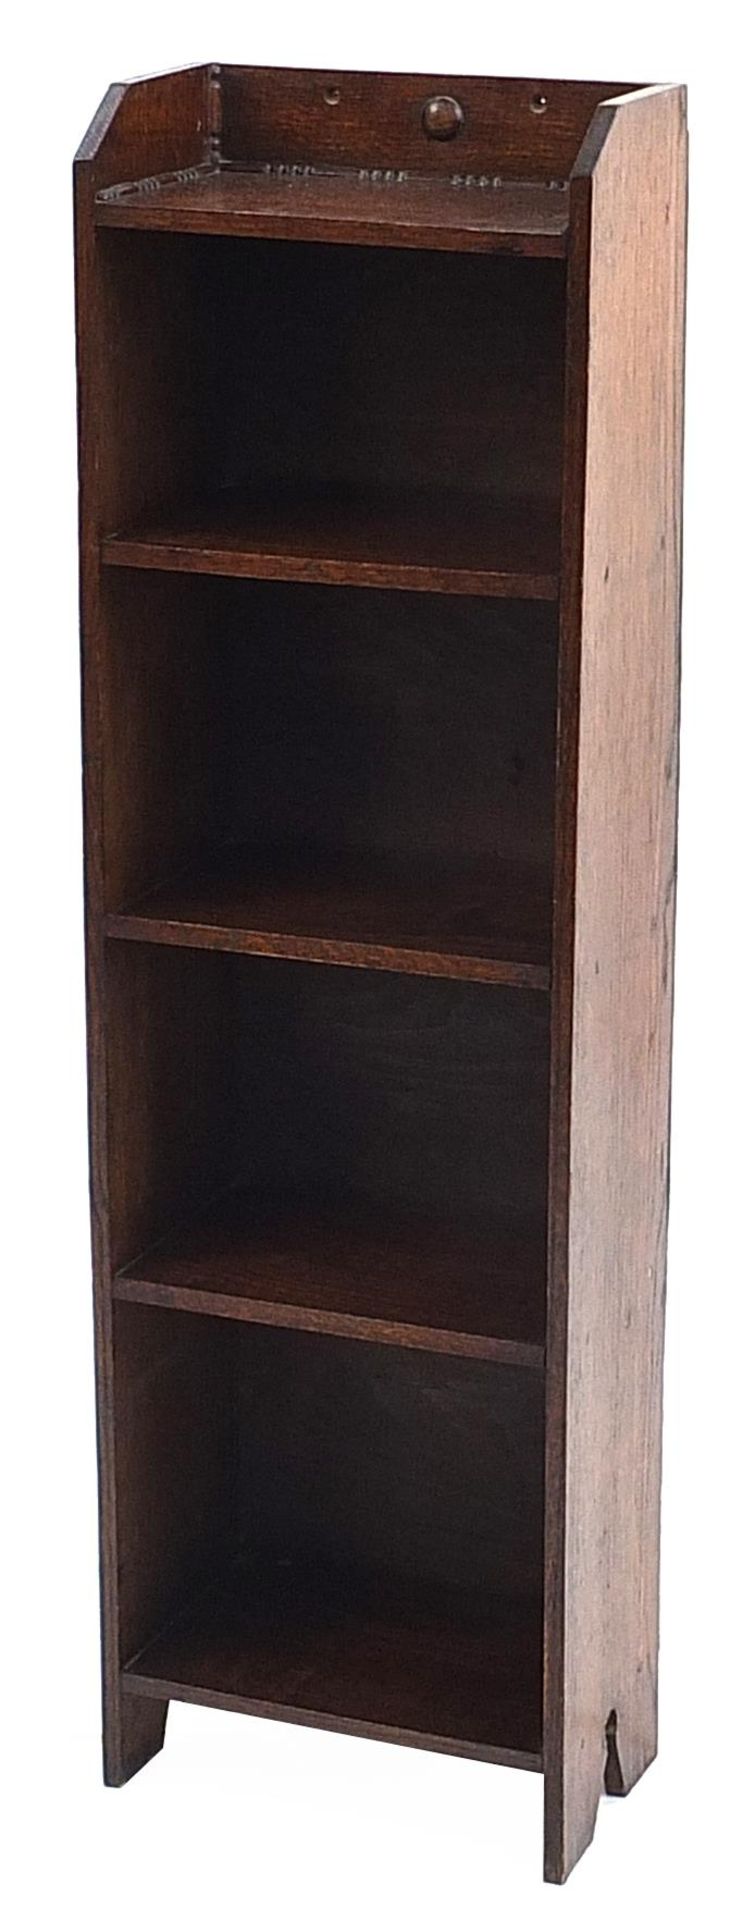 Manner of Liberty & Co, Arts & Crafts oak five shelf open bookcase, 106cm H x 30.5cm W x 19cm D